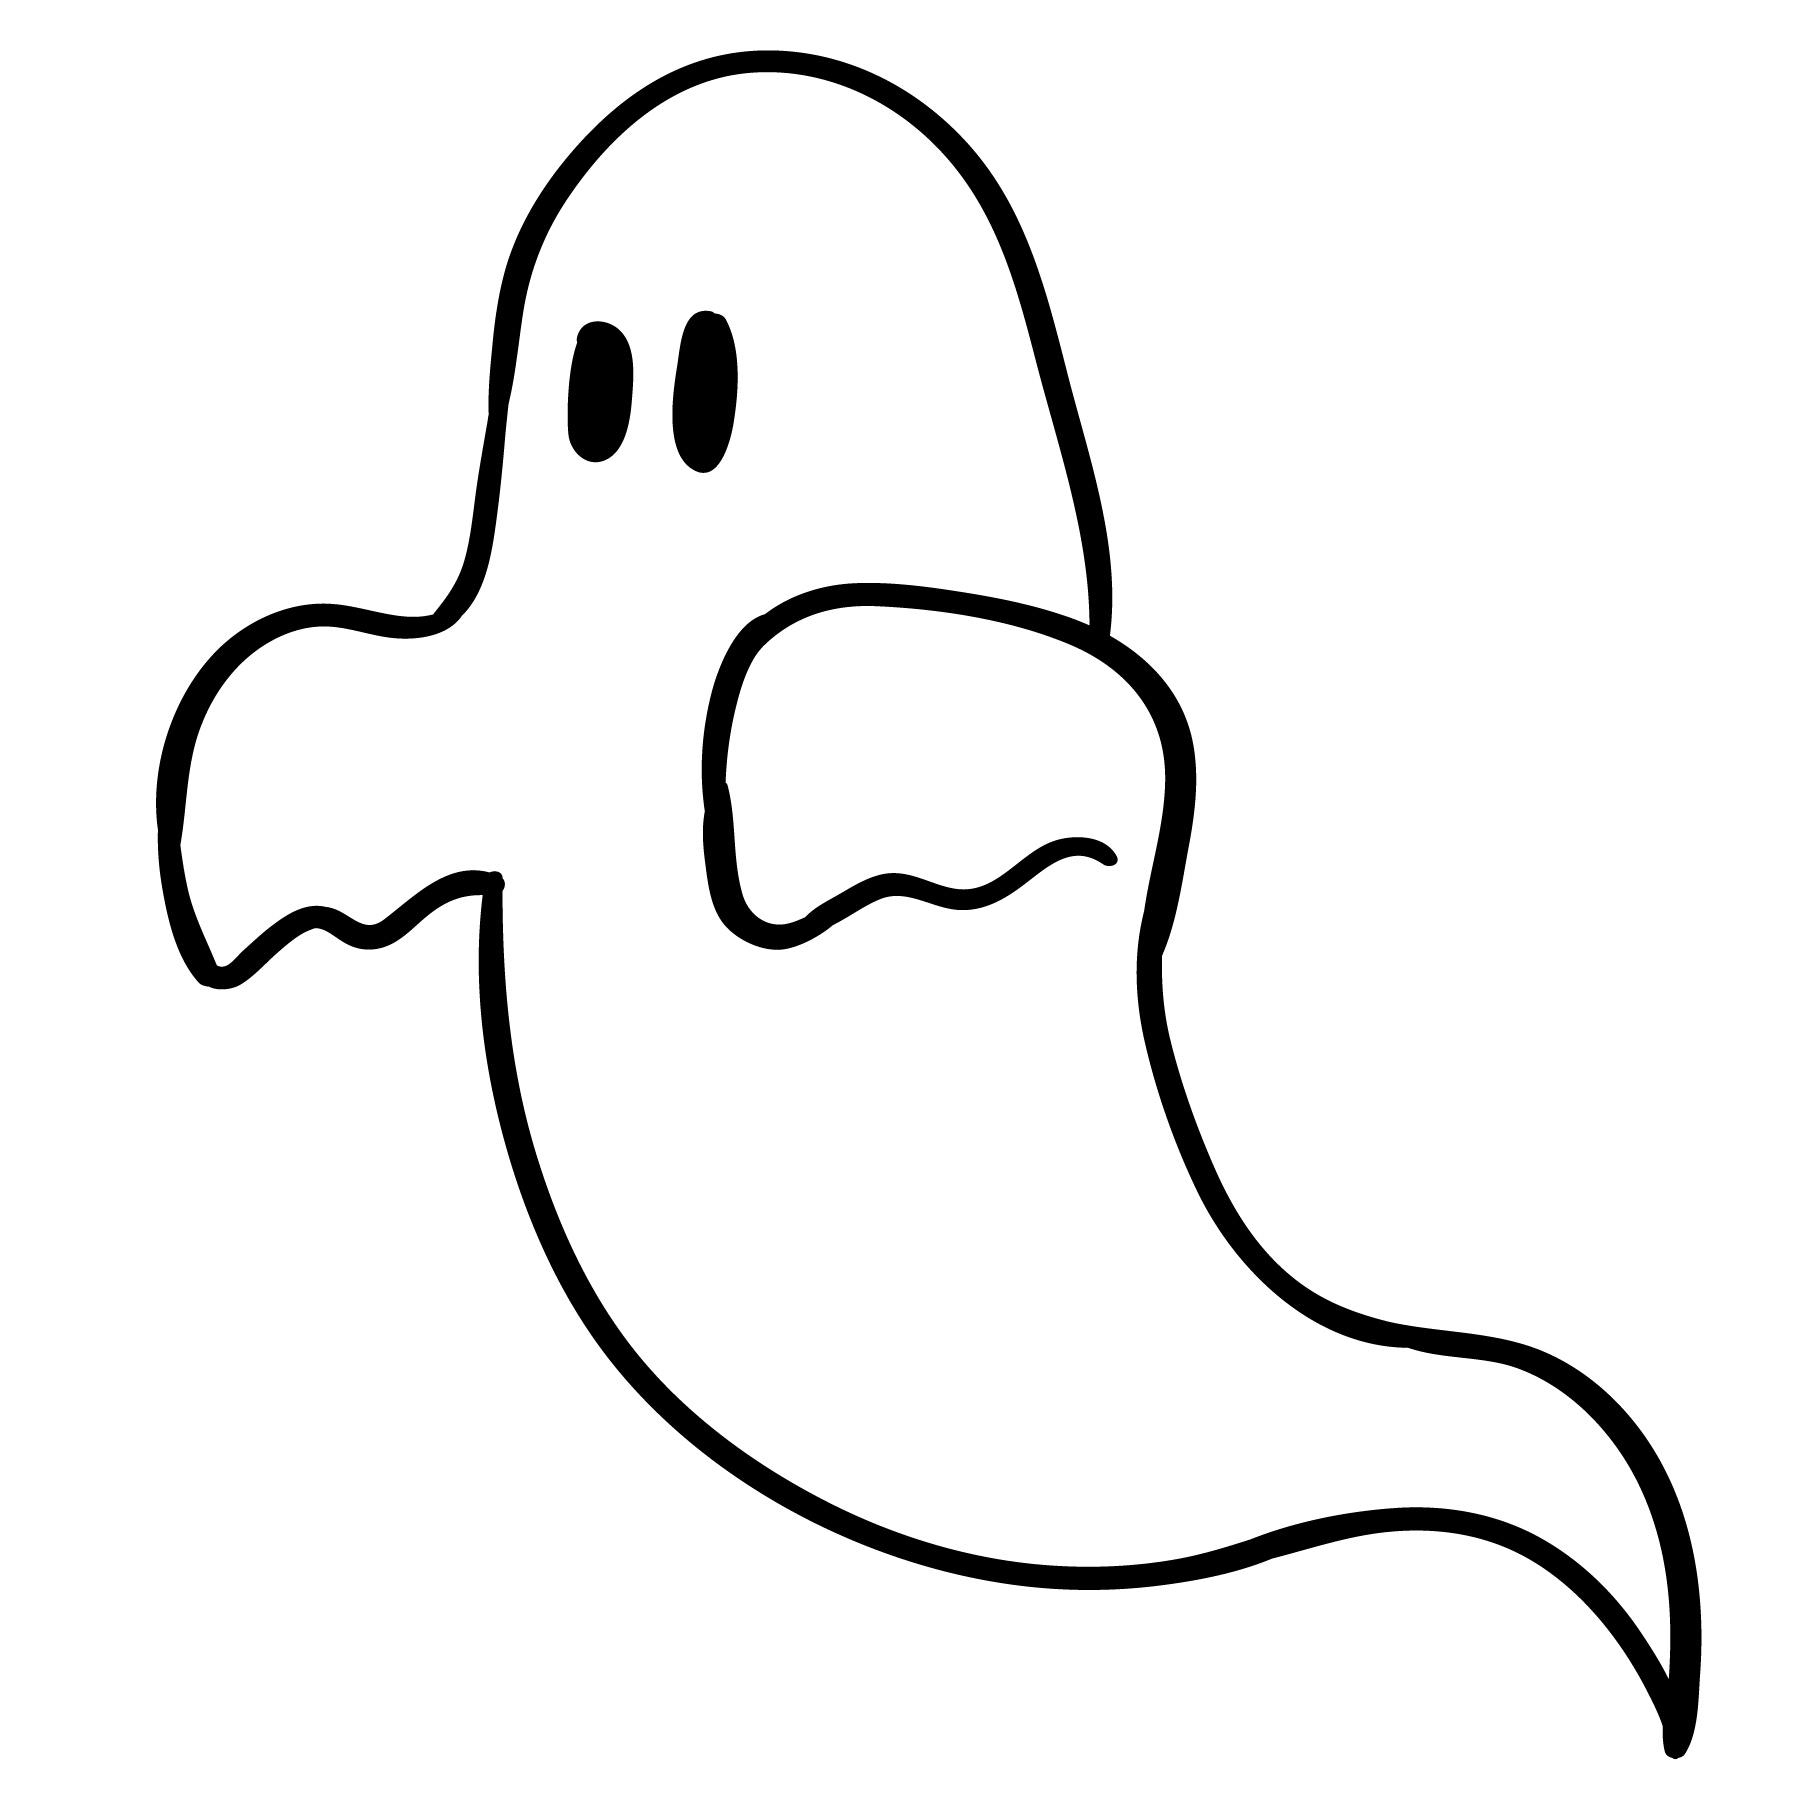 Download ghost - Download Free Vectors, Clipart Graphics & Vector Art